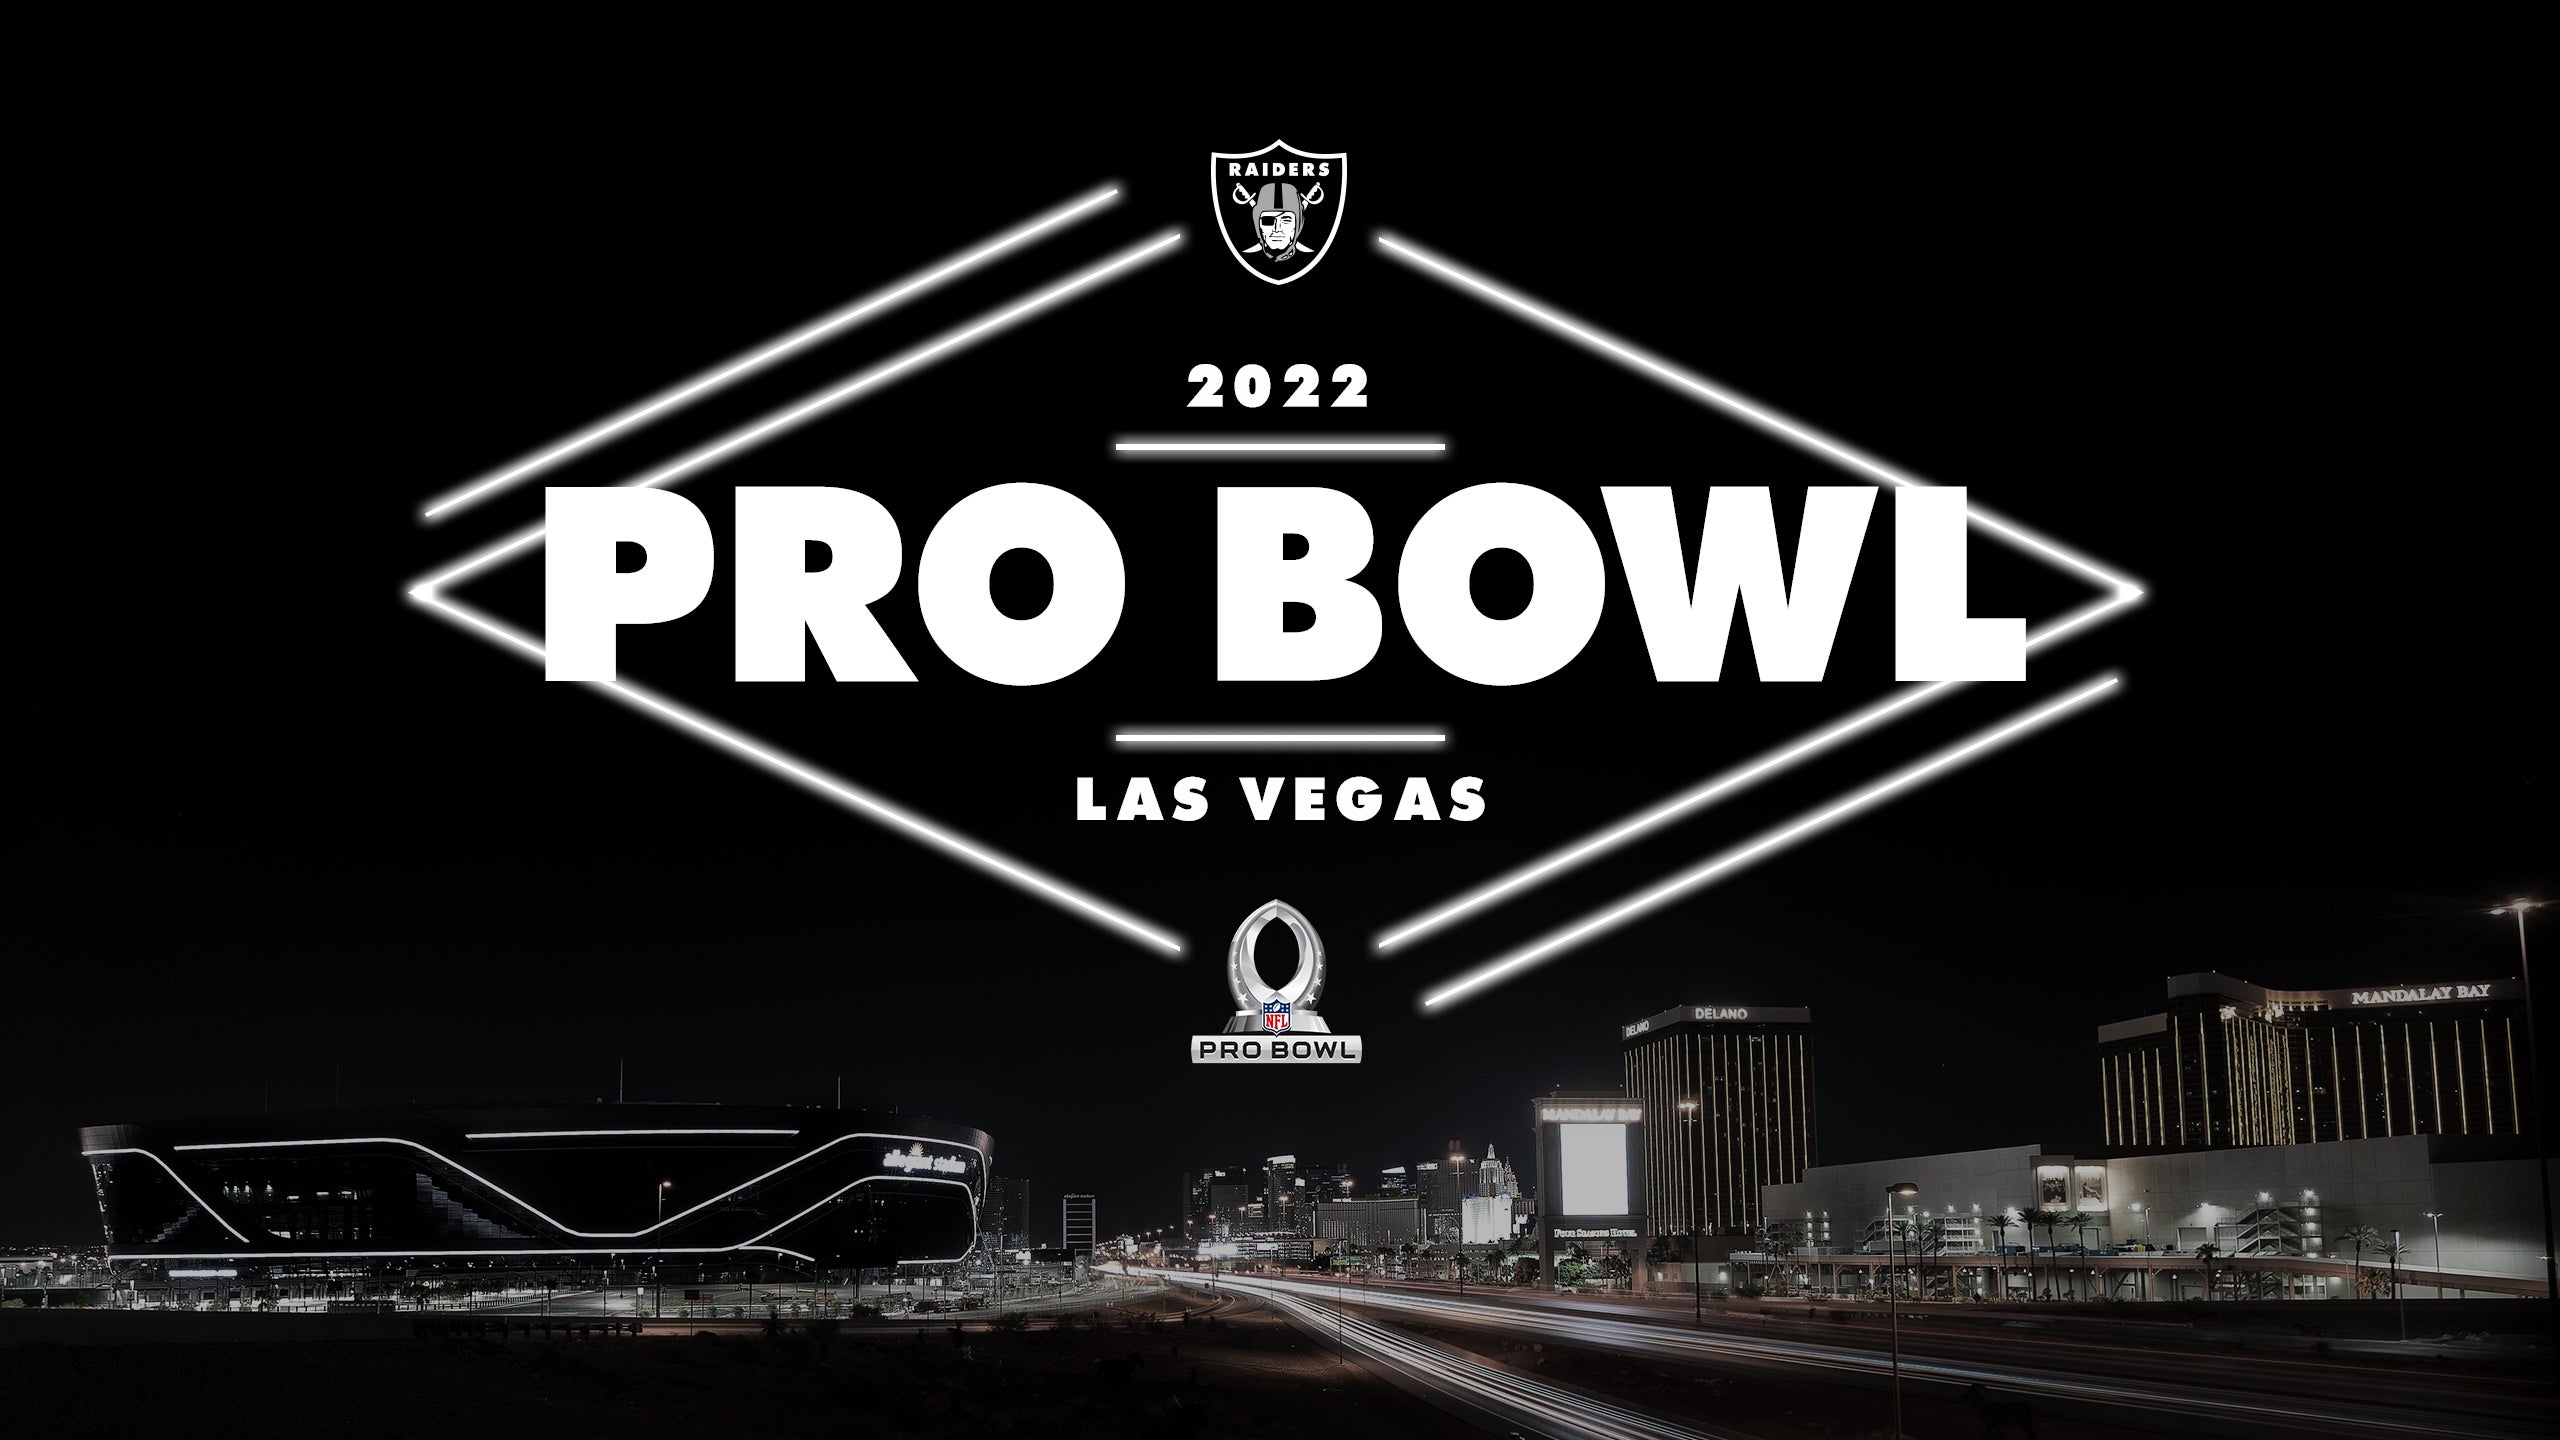 2022 Pro Bowl in Las Vegas,